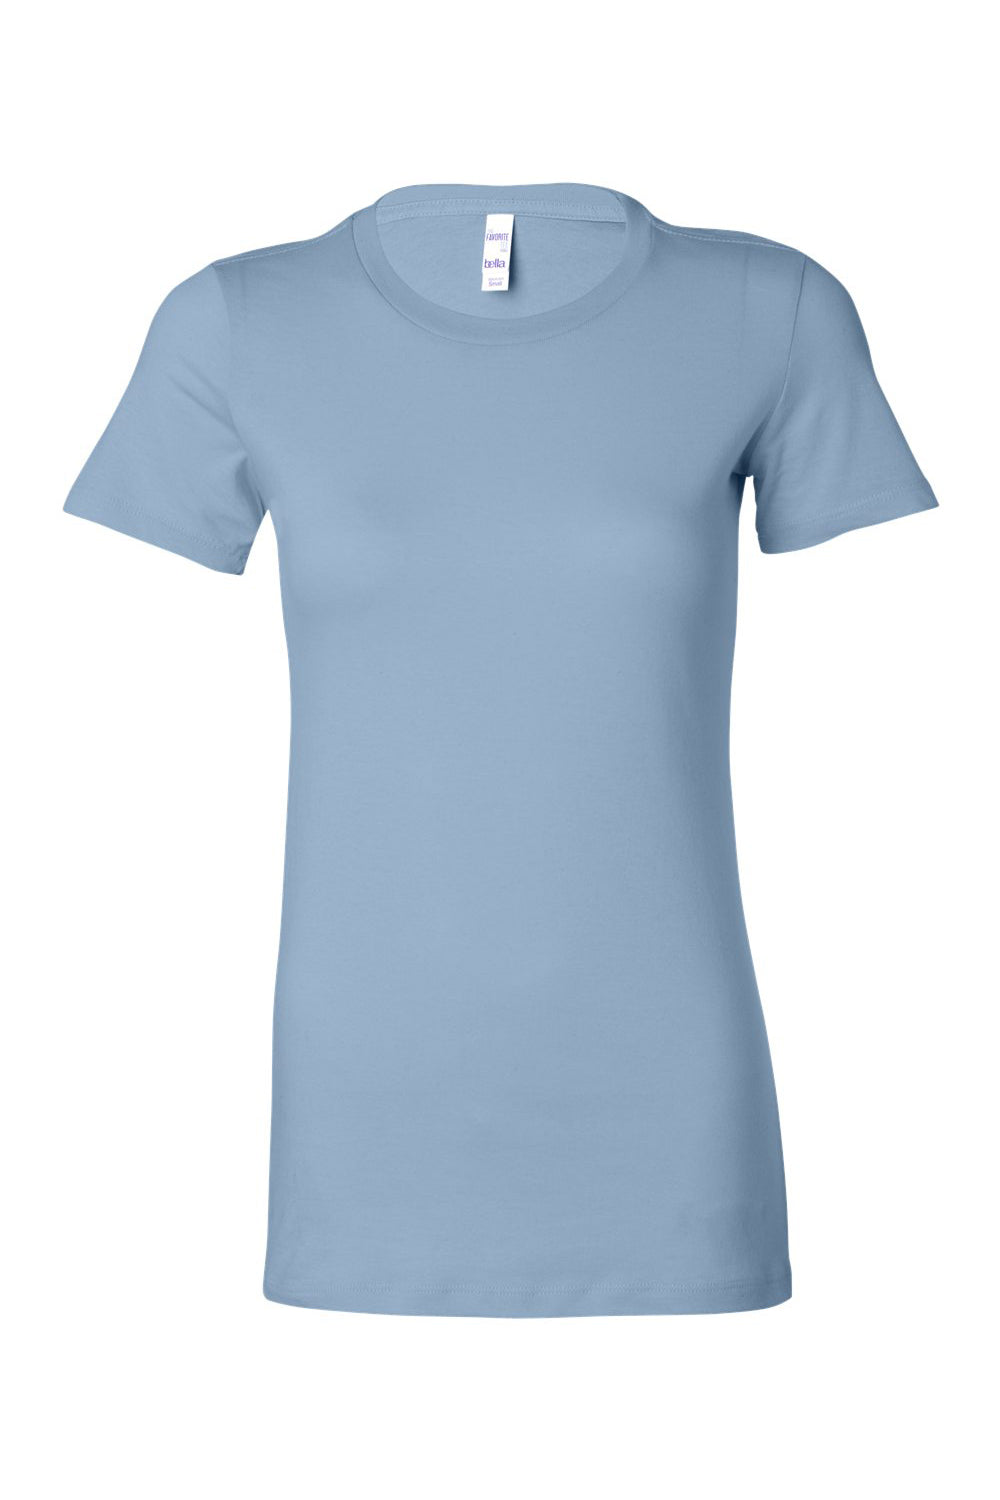 Bella + Canvas BC6004/6004 Womens The Favorite Short Sleeve Crewneck T-Shirt Baby Blue Flat Front